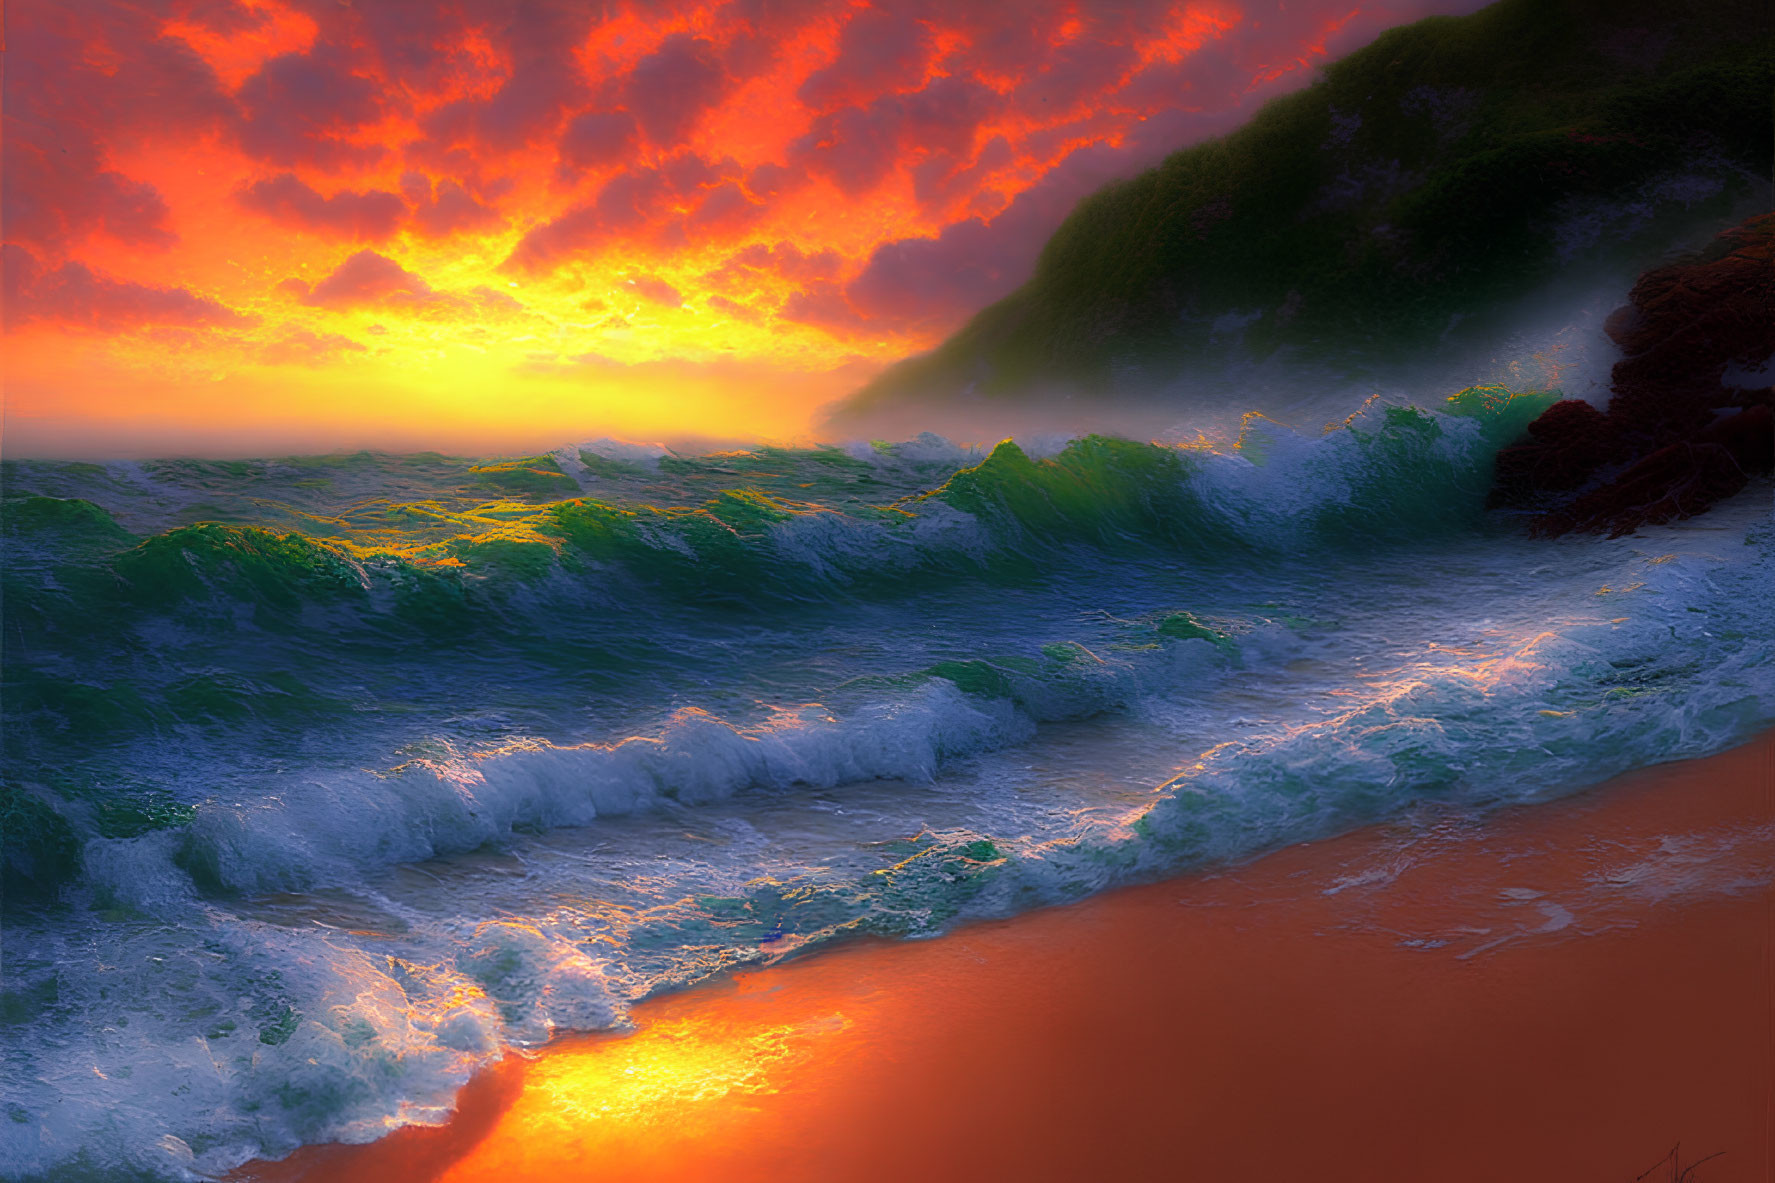 Fiery sunset over green waves on sandy beach